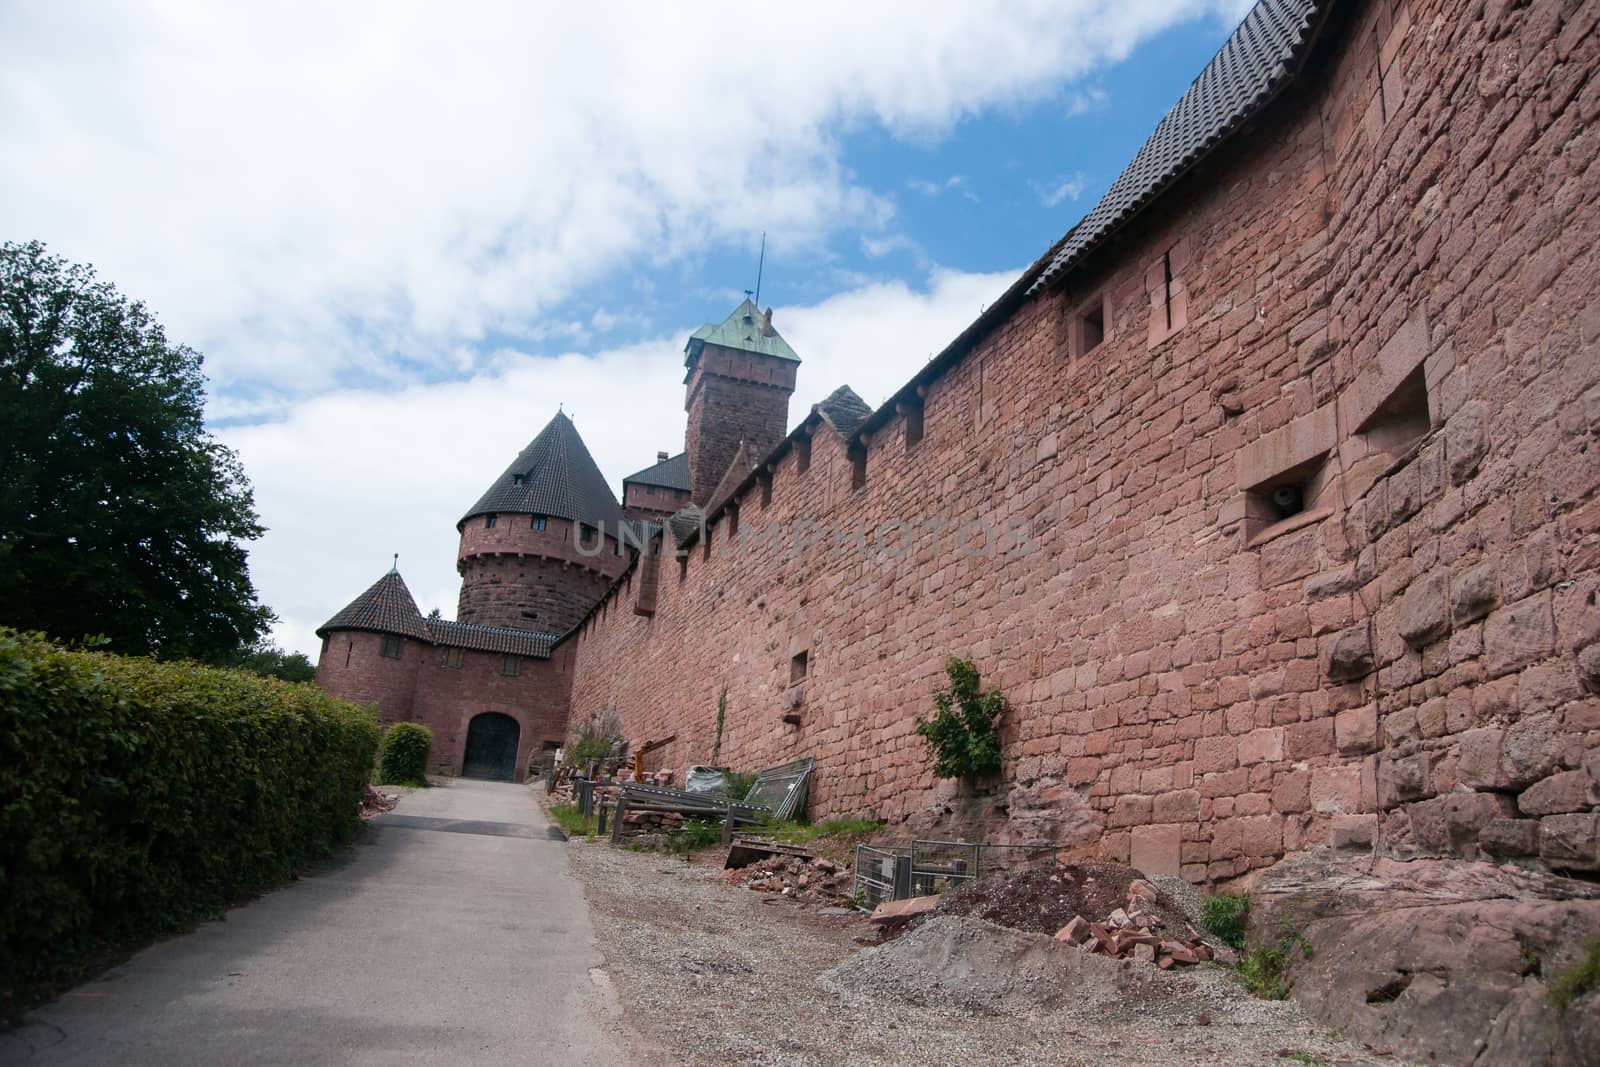 Castle Haut Koenigsbourg by javax